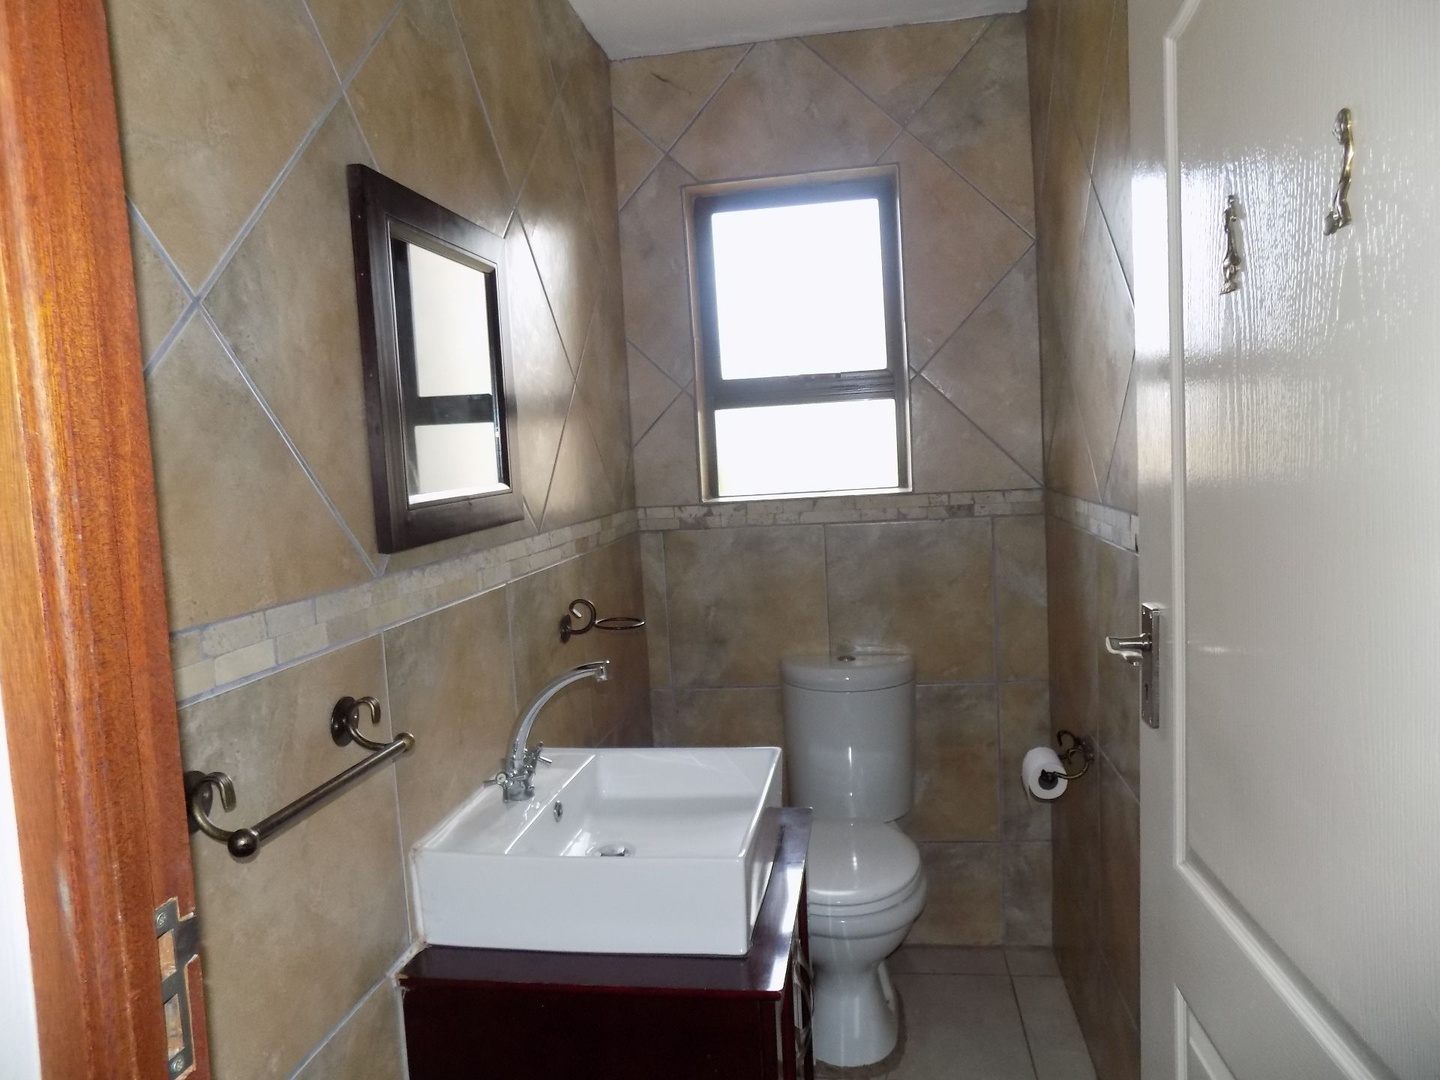 House in Da Nice Estate - Guest toilet.JPG